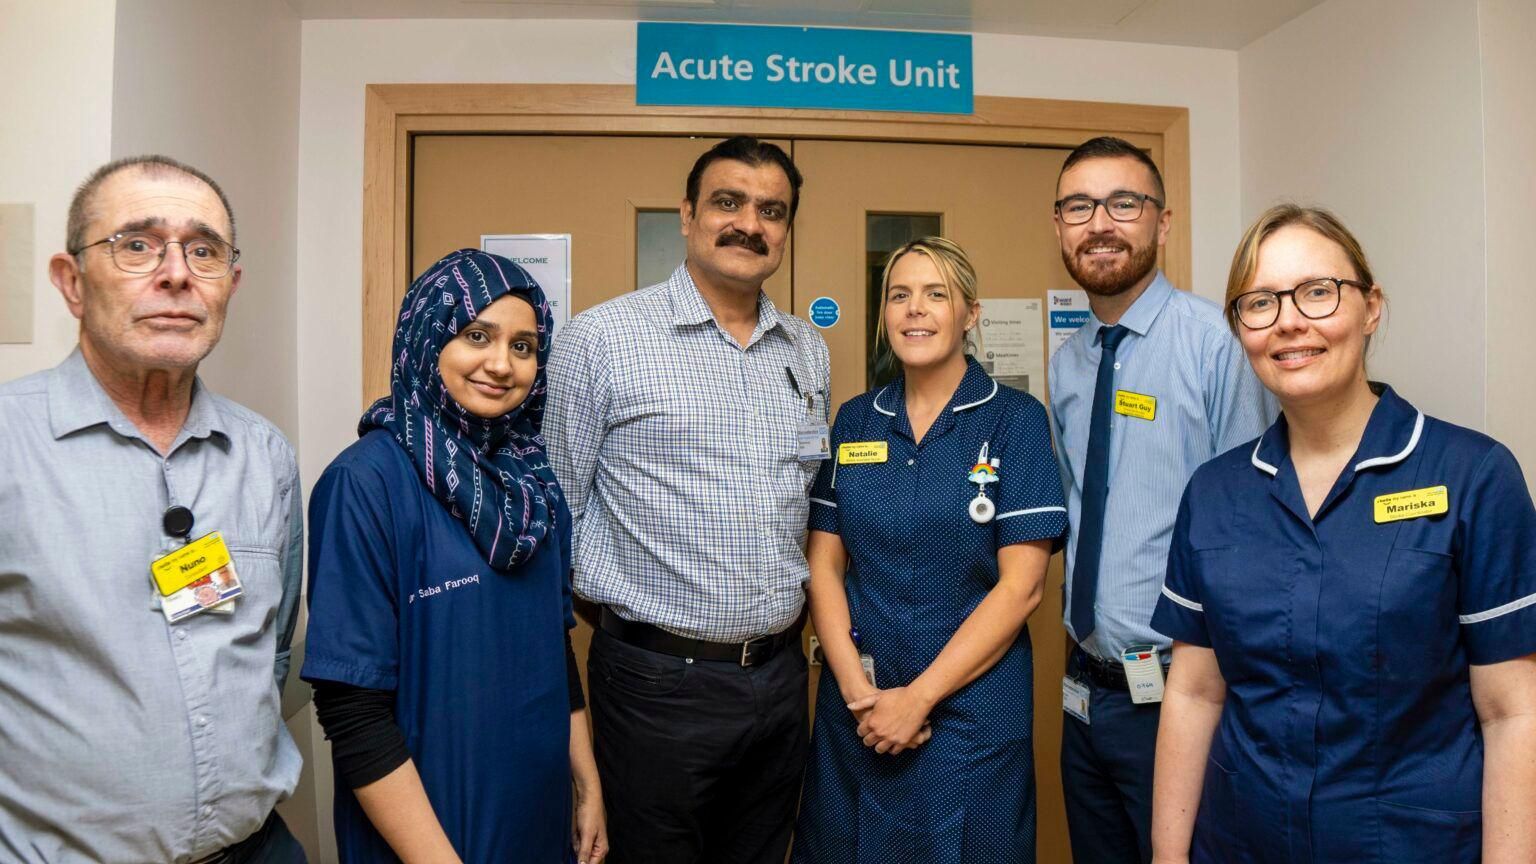 Acute Stroke Unit at Worcestershire Royal Hospital